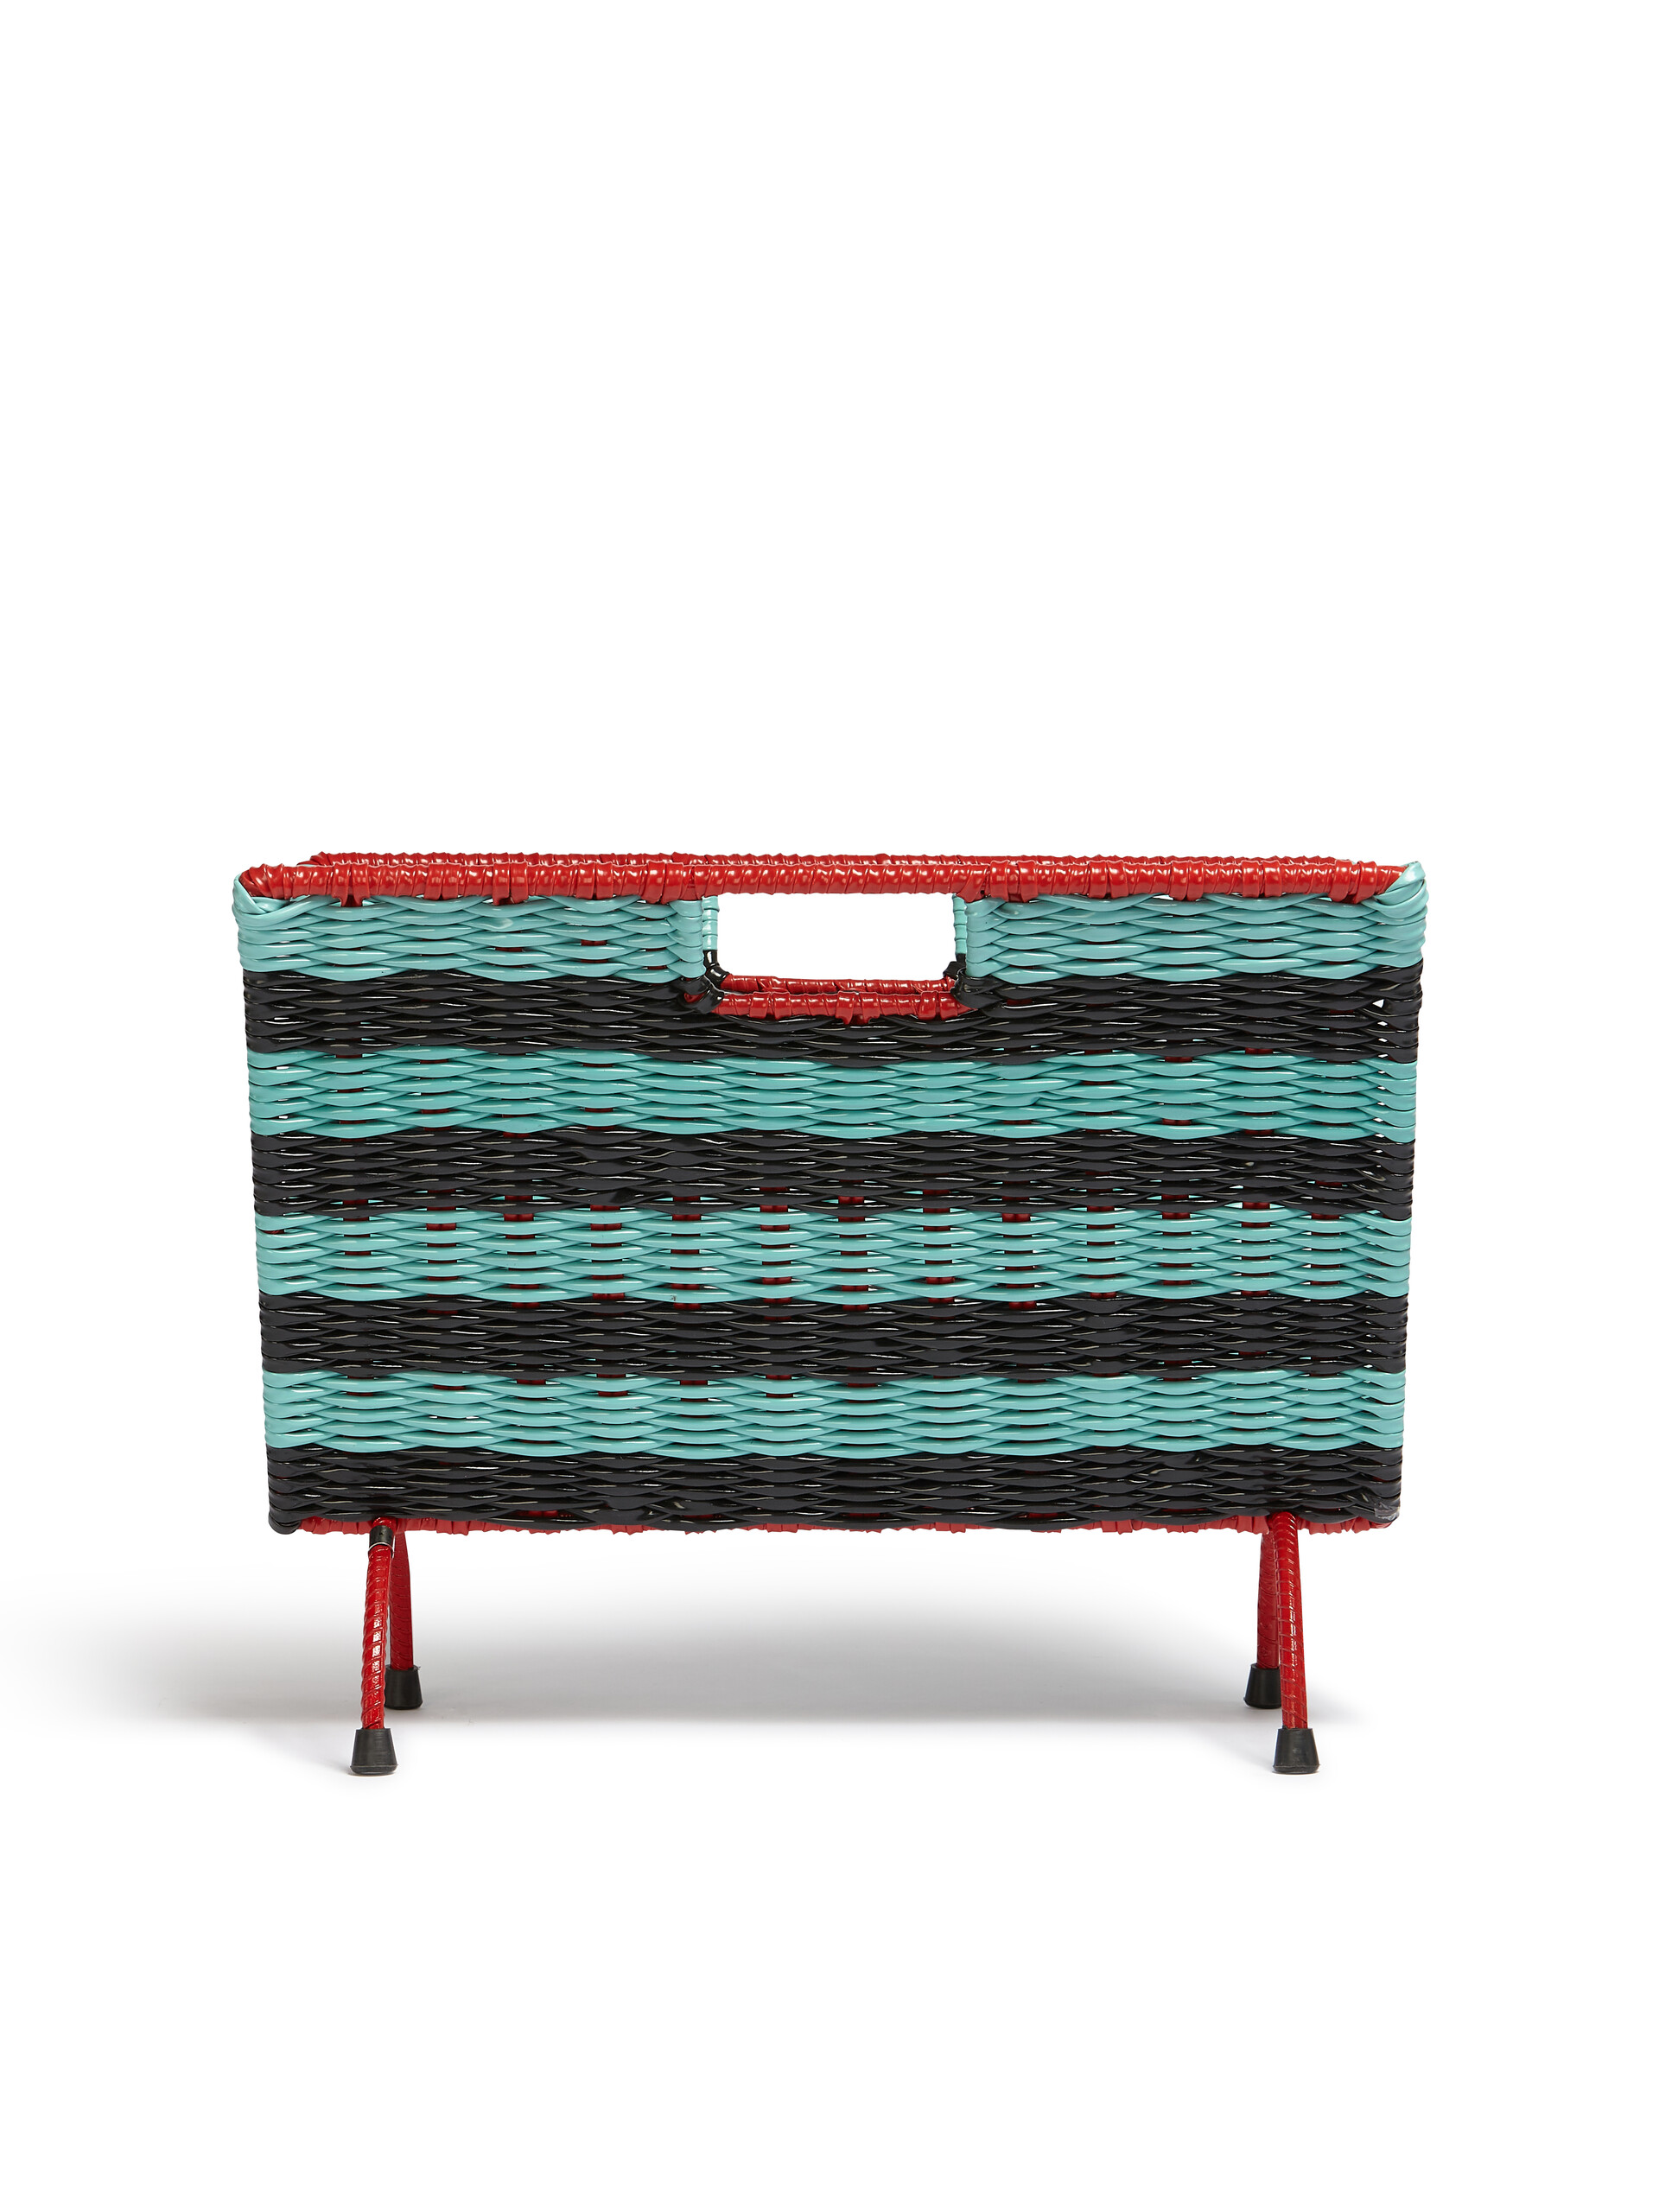 MARNI MARKET green and black magazine rack - Furniture - Image 3